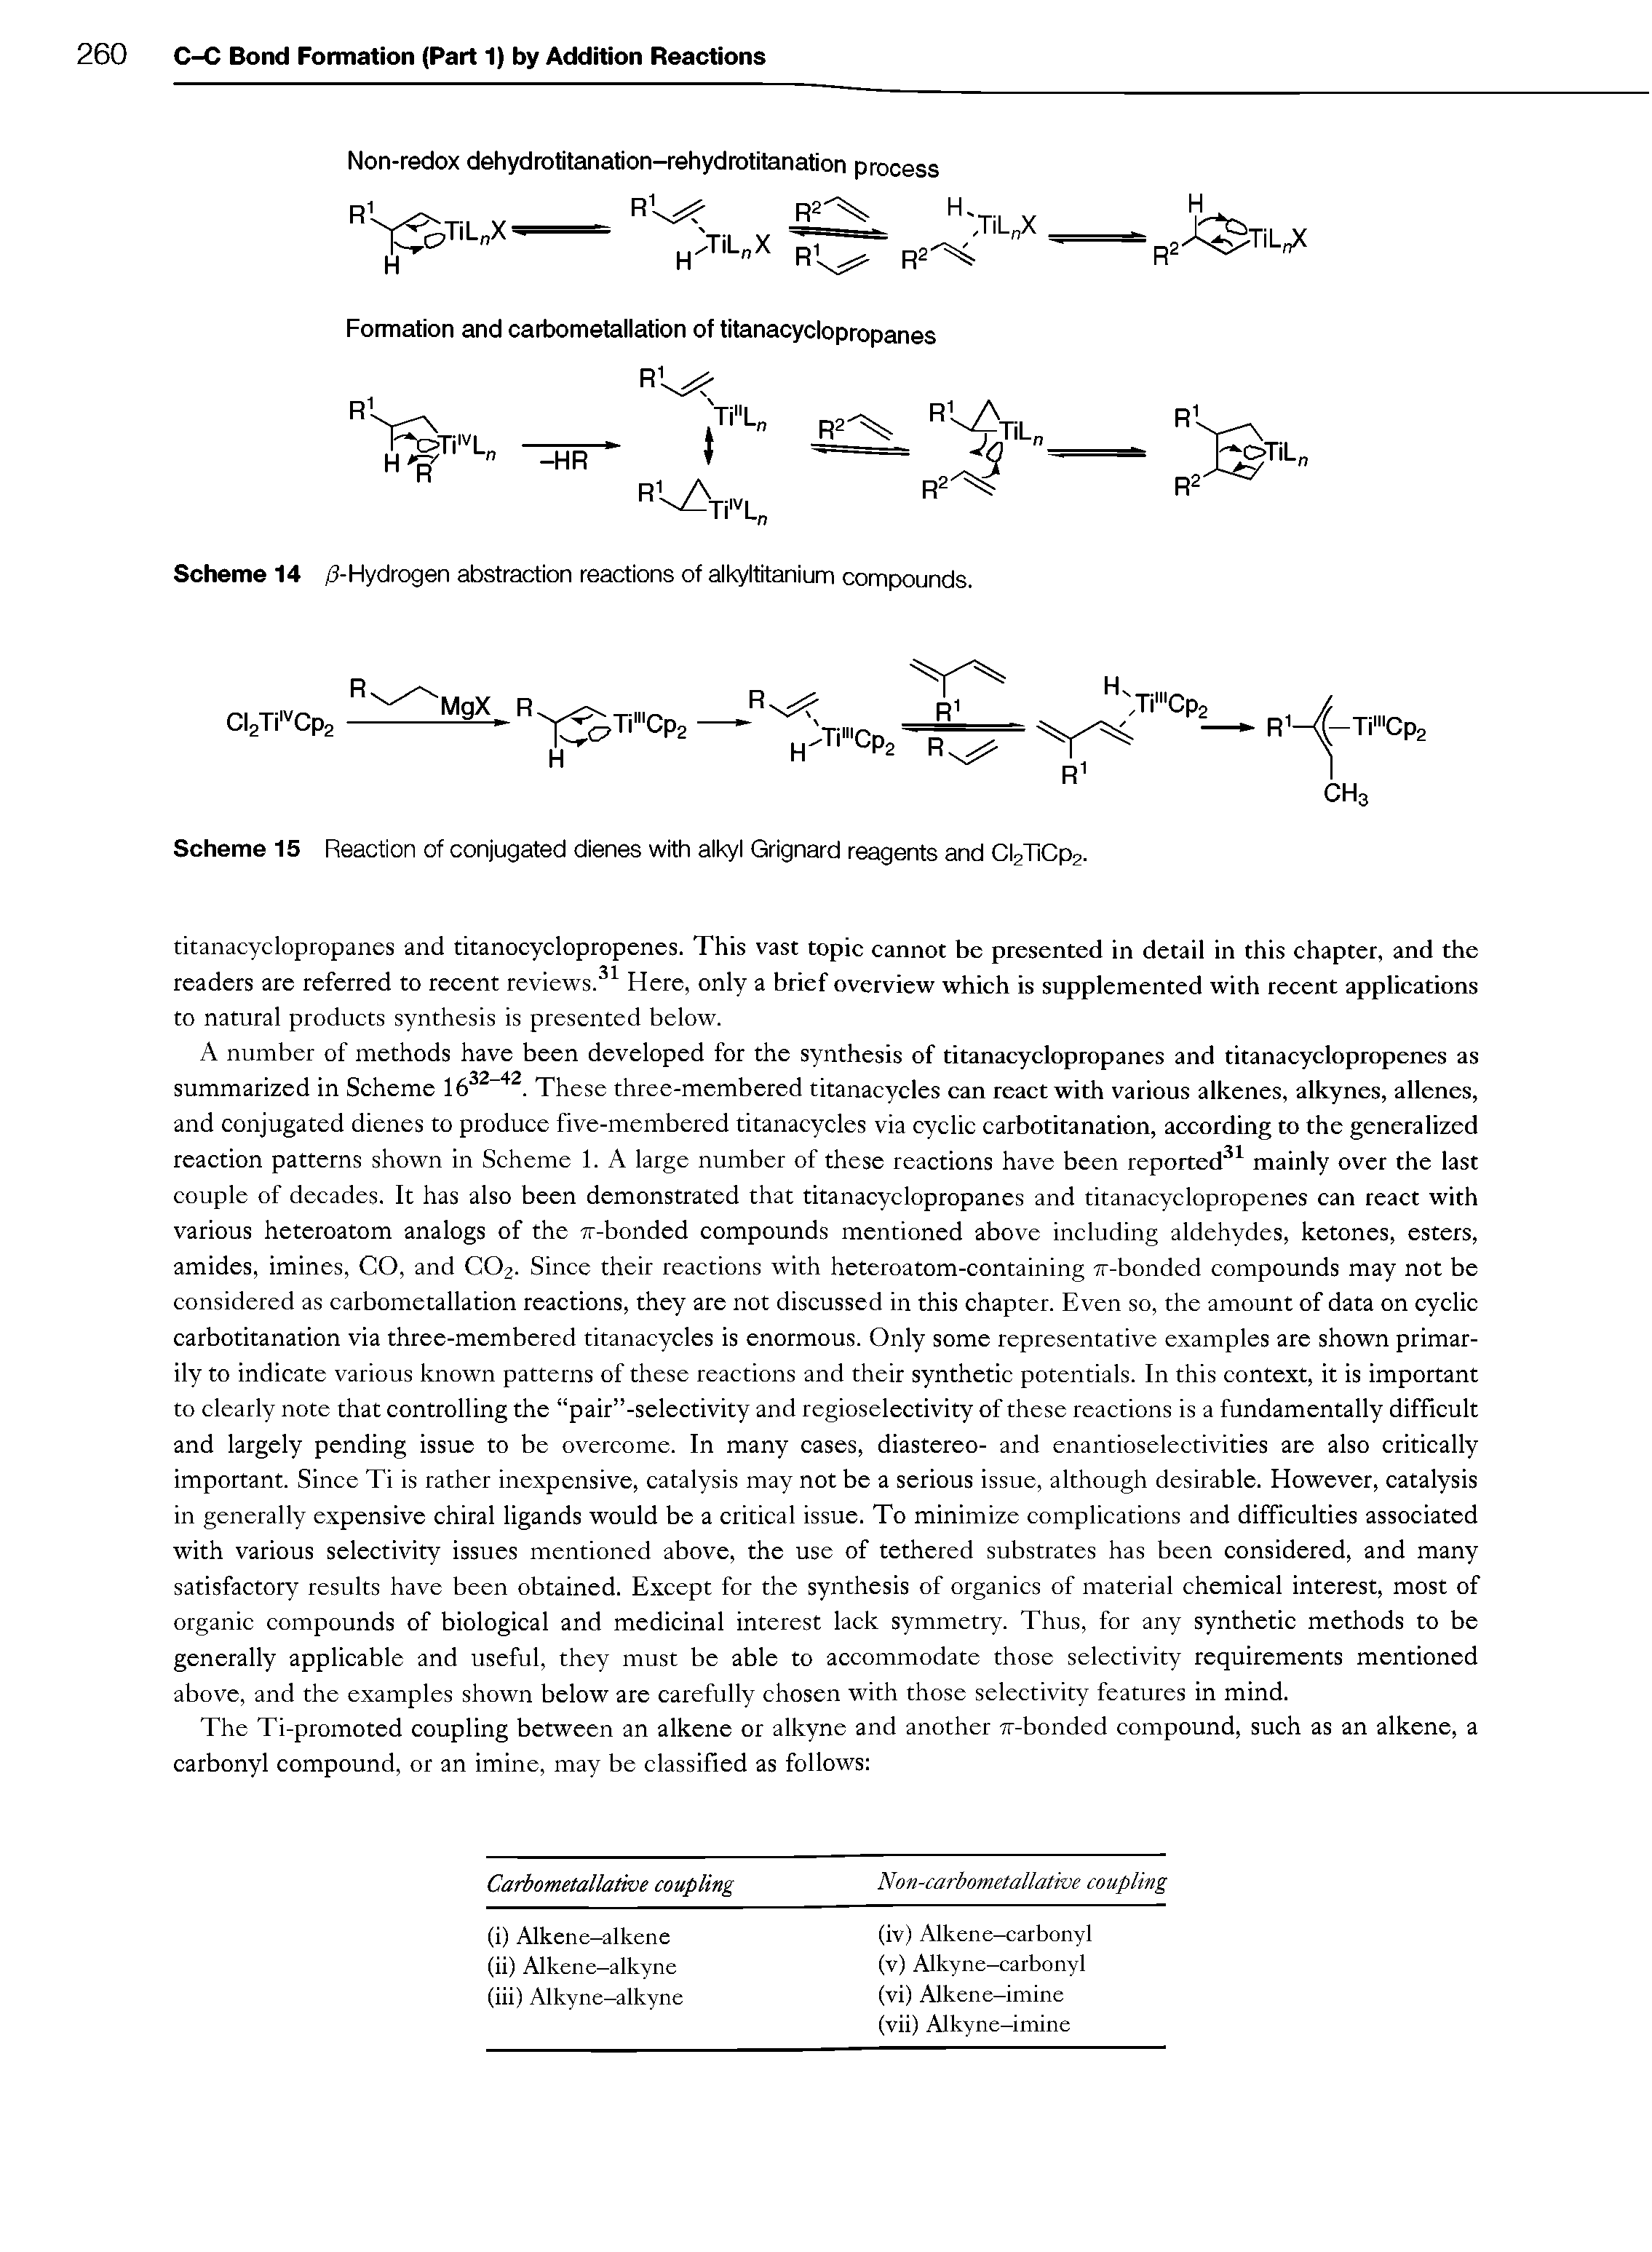 Scheme 14 /3-Hydrogen abstraction reactions of alkyltitanium compounds.